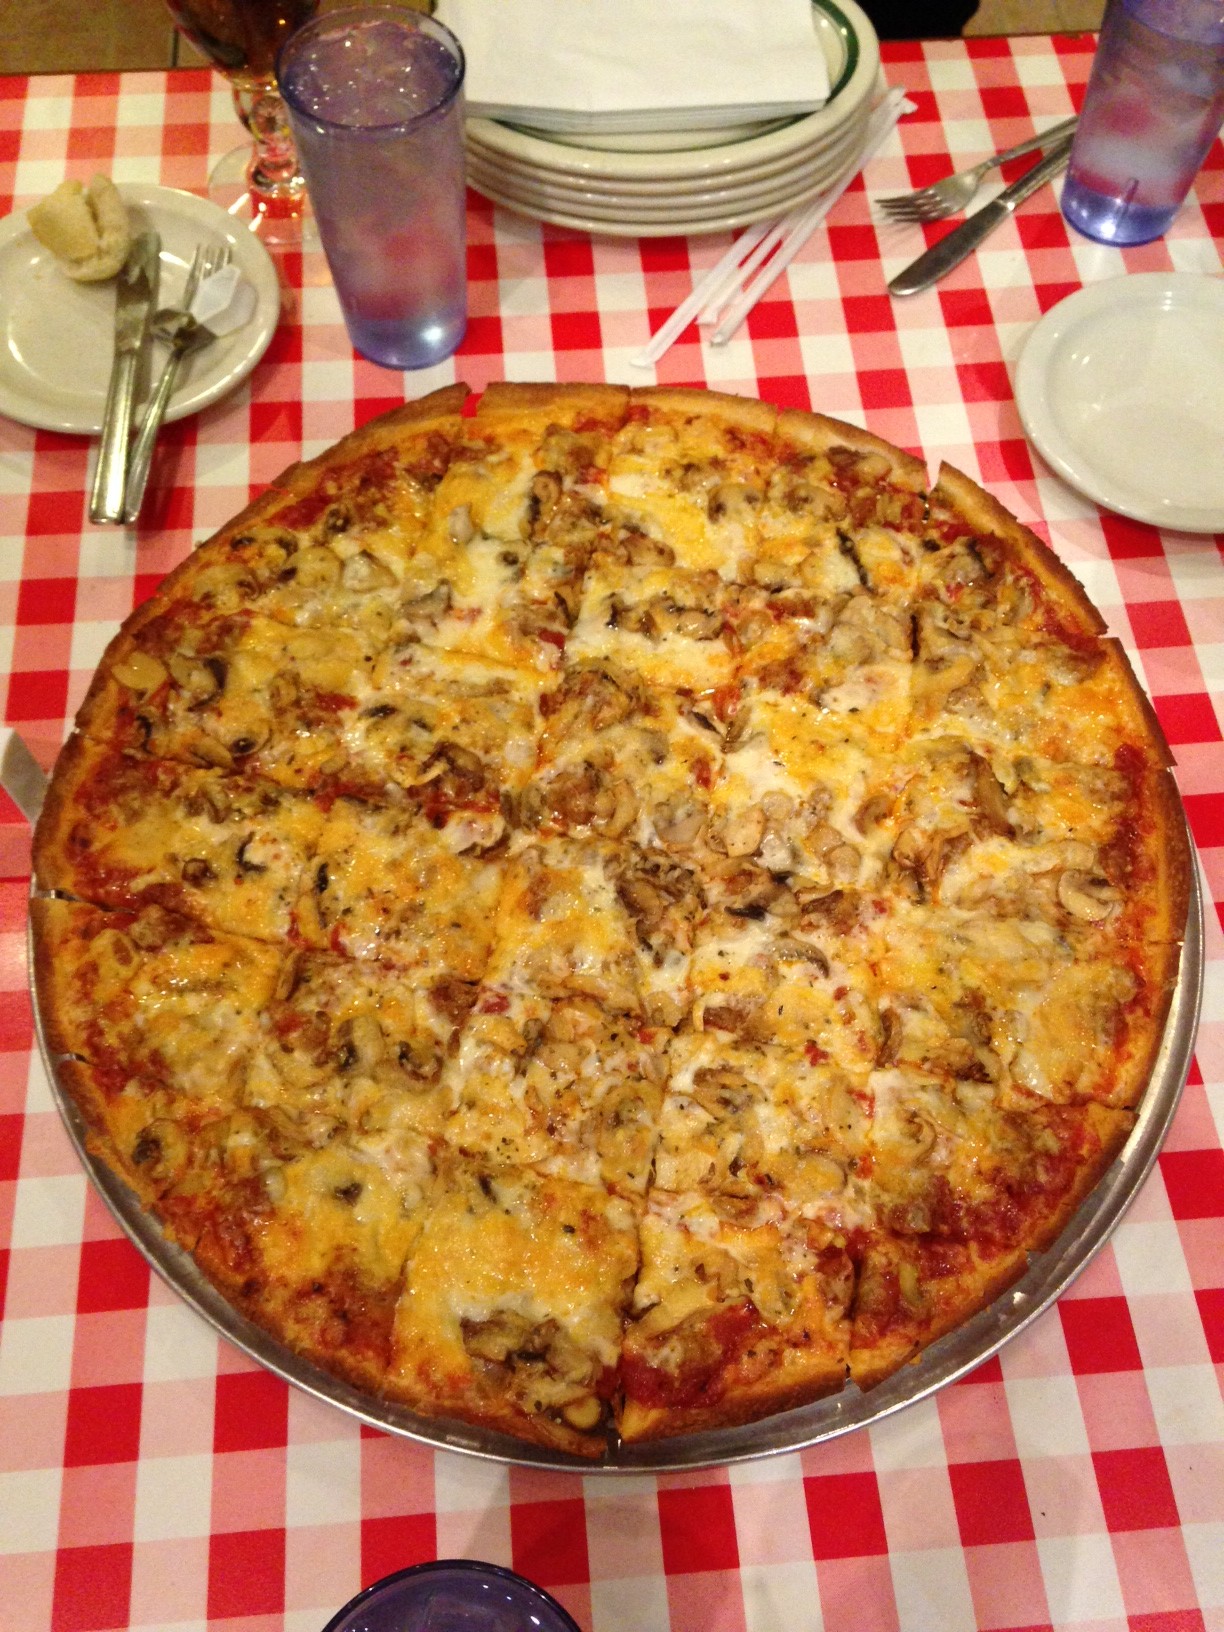 Aurelio's Pizza - Addison, IL - Pizza Pie - Dec 2013